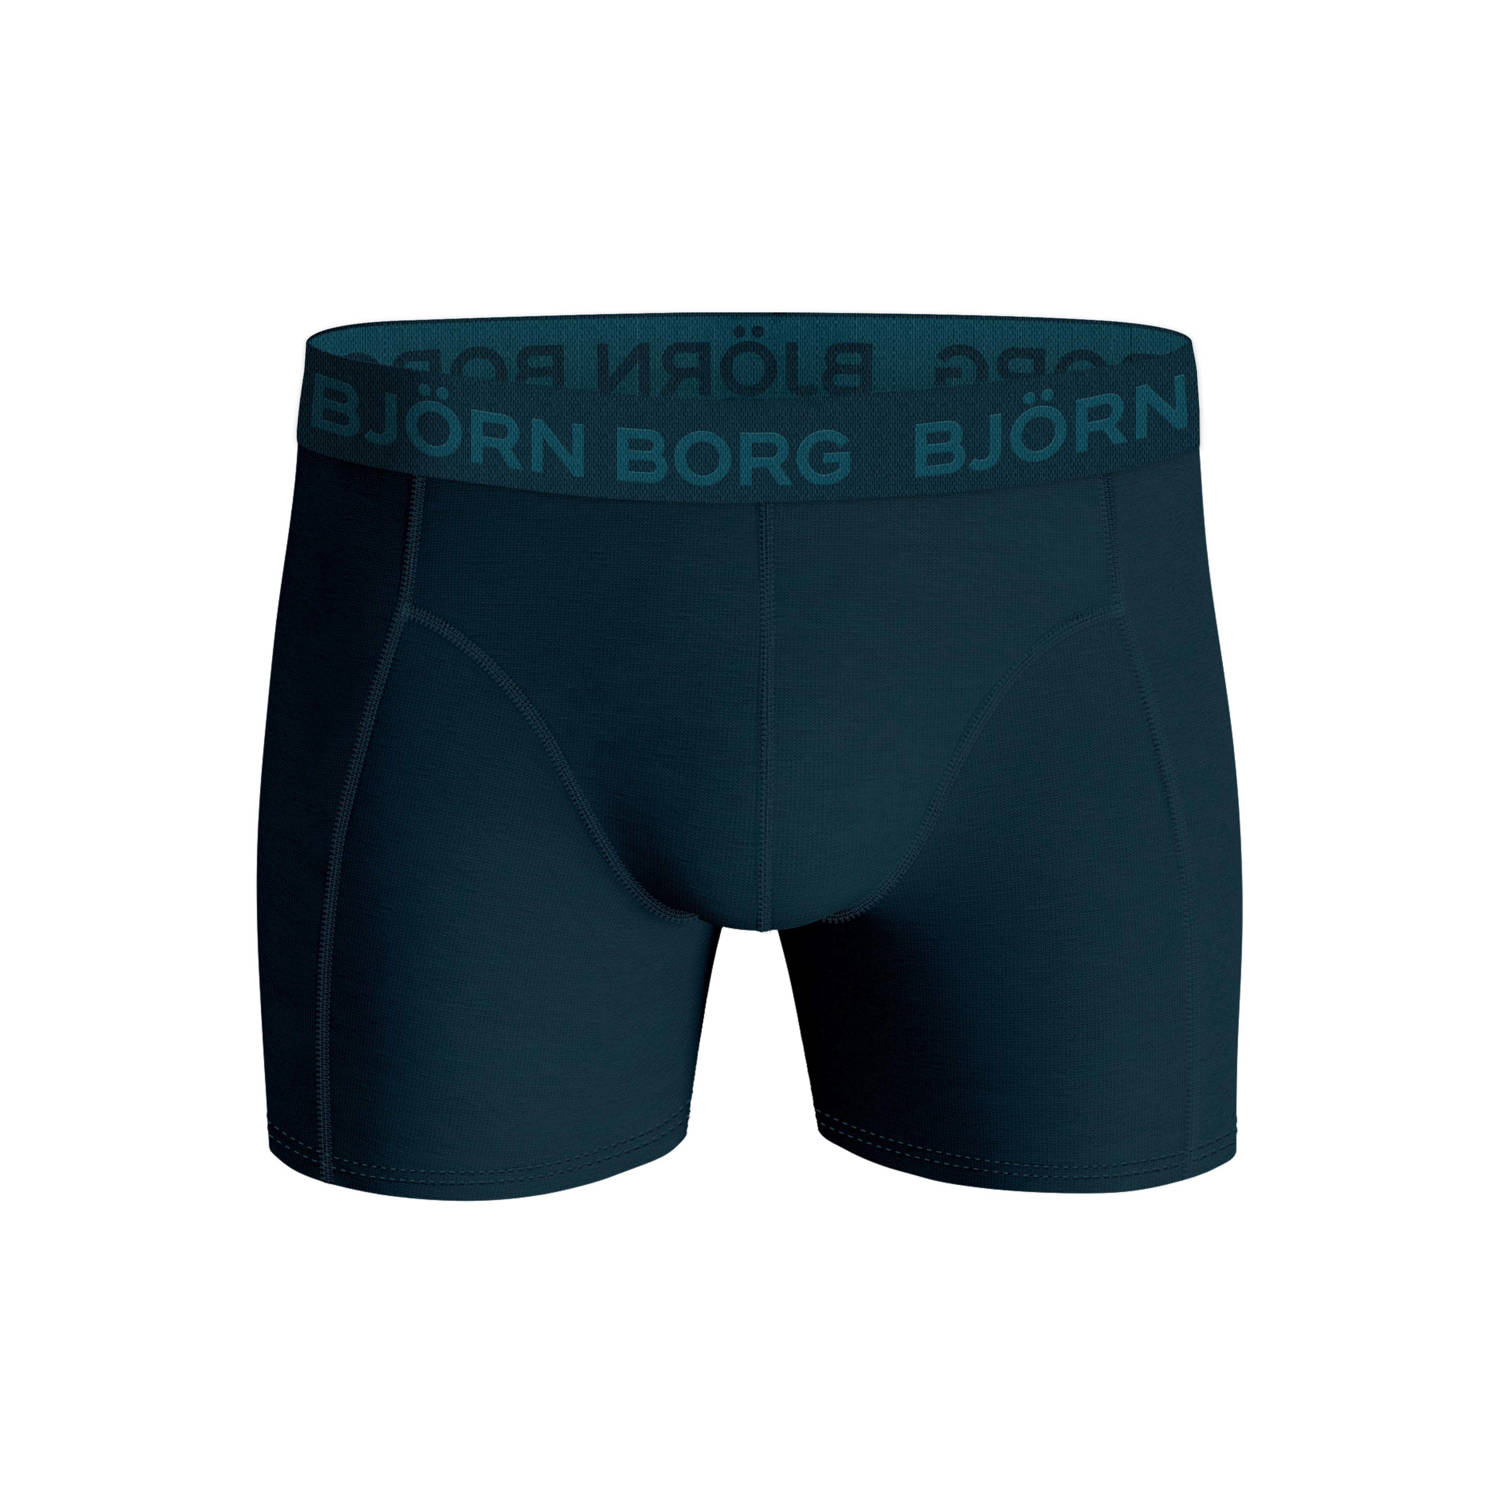 Björn Borg giftbox boxershort (set van 5)